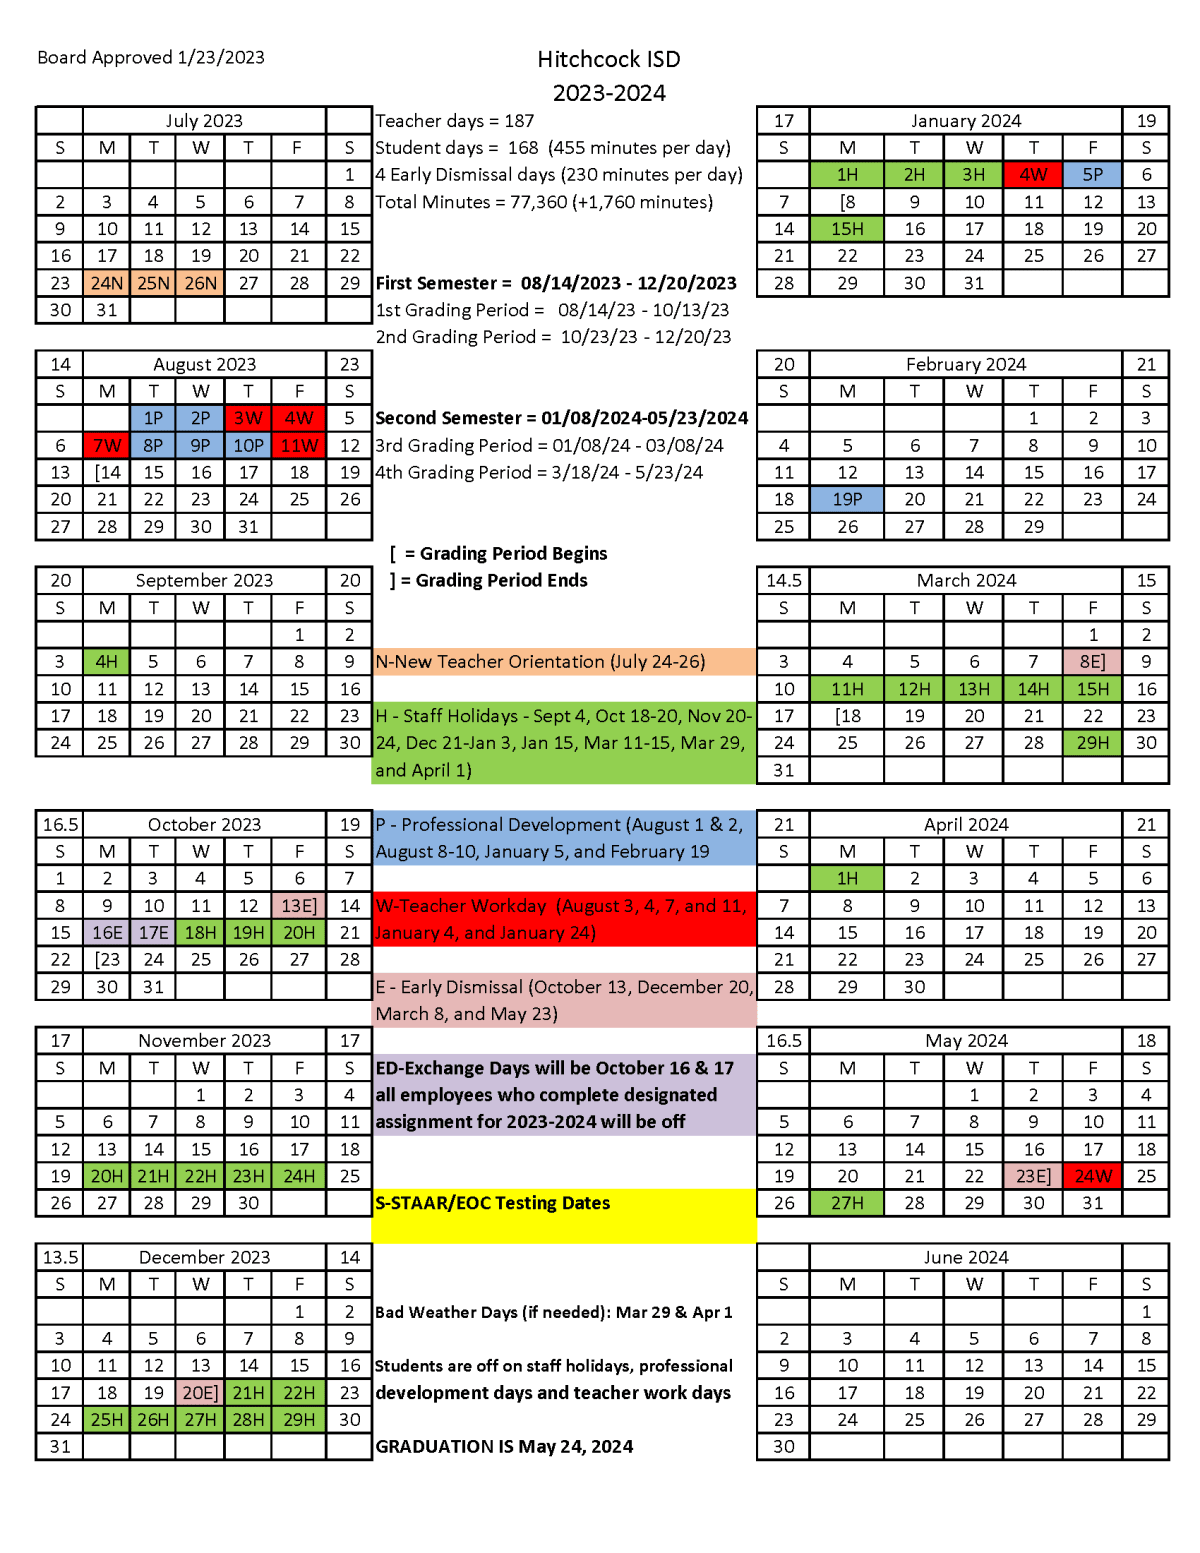 Hitchcock Independent School District Calendar 2024 and 2025